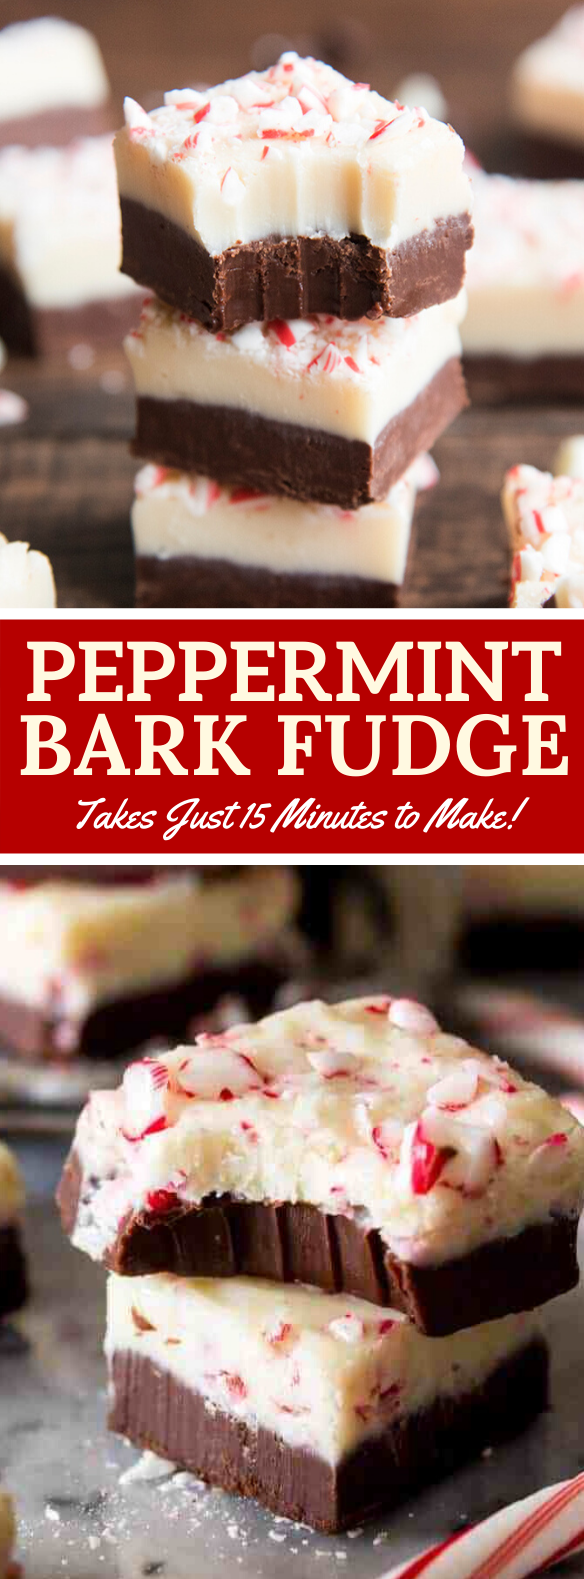 Peppermint Bark Fudge #desserts #candy